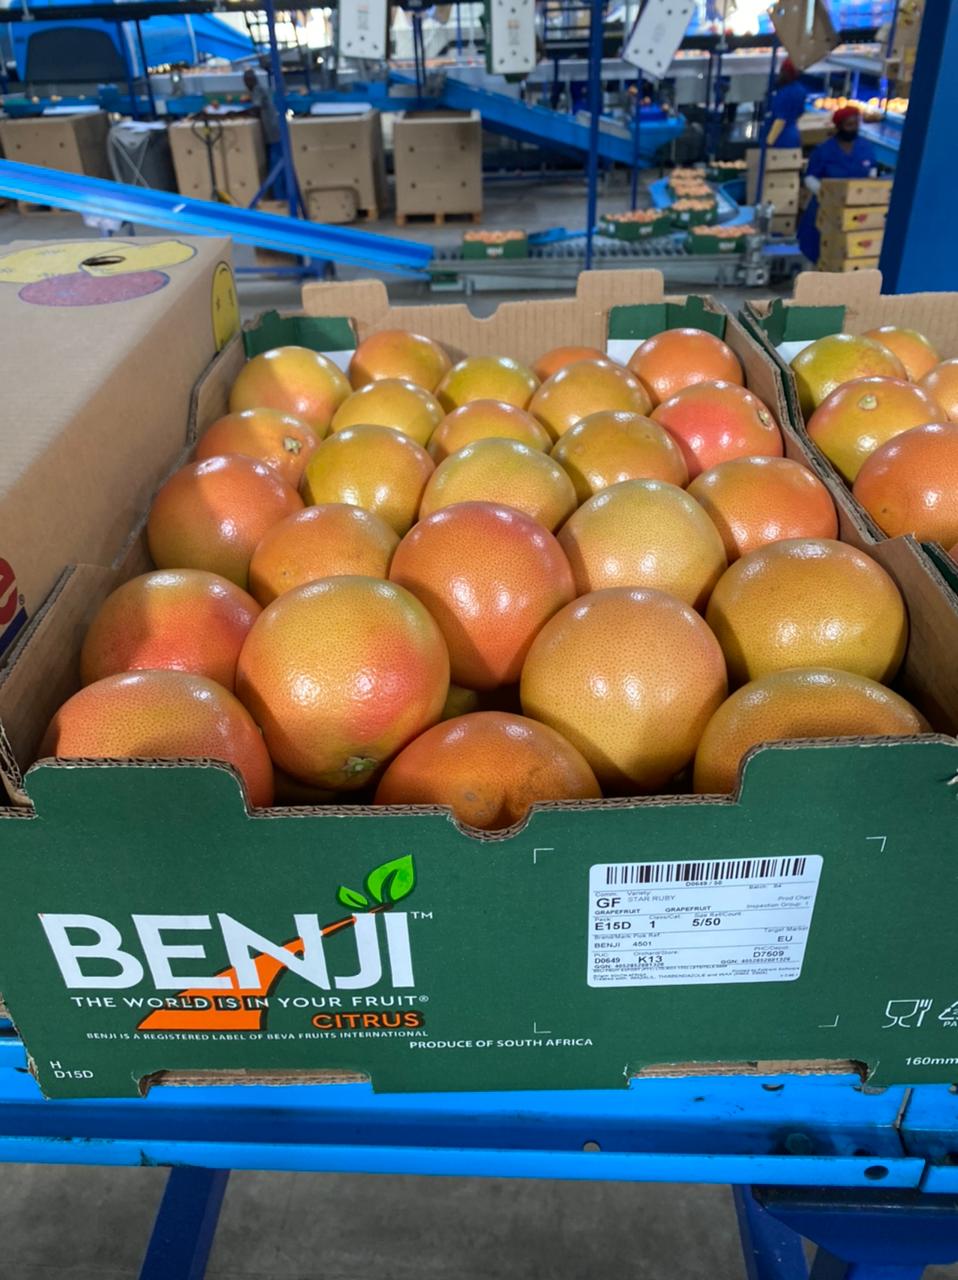 Boîte de pomelos Star Ruby en Afrique du Sud emballés par le label Benji - Beva Fruits International (BFI)